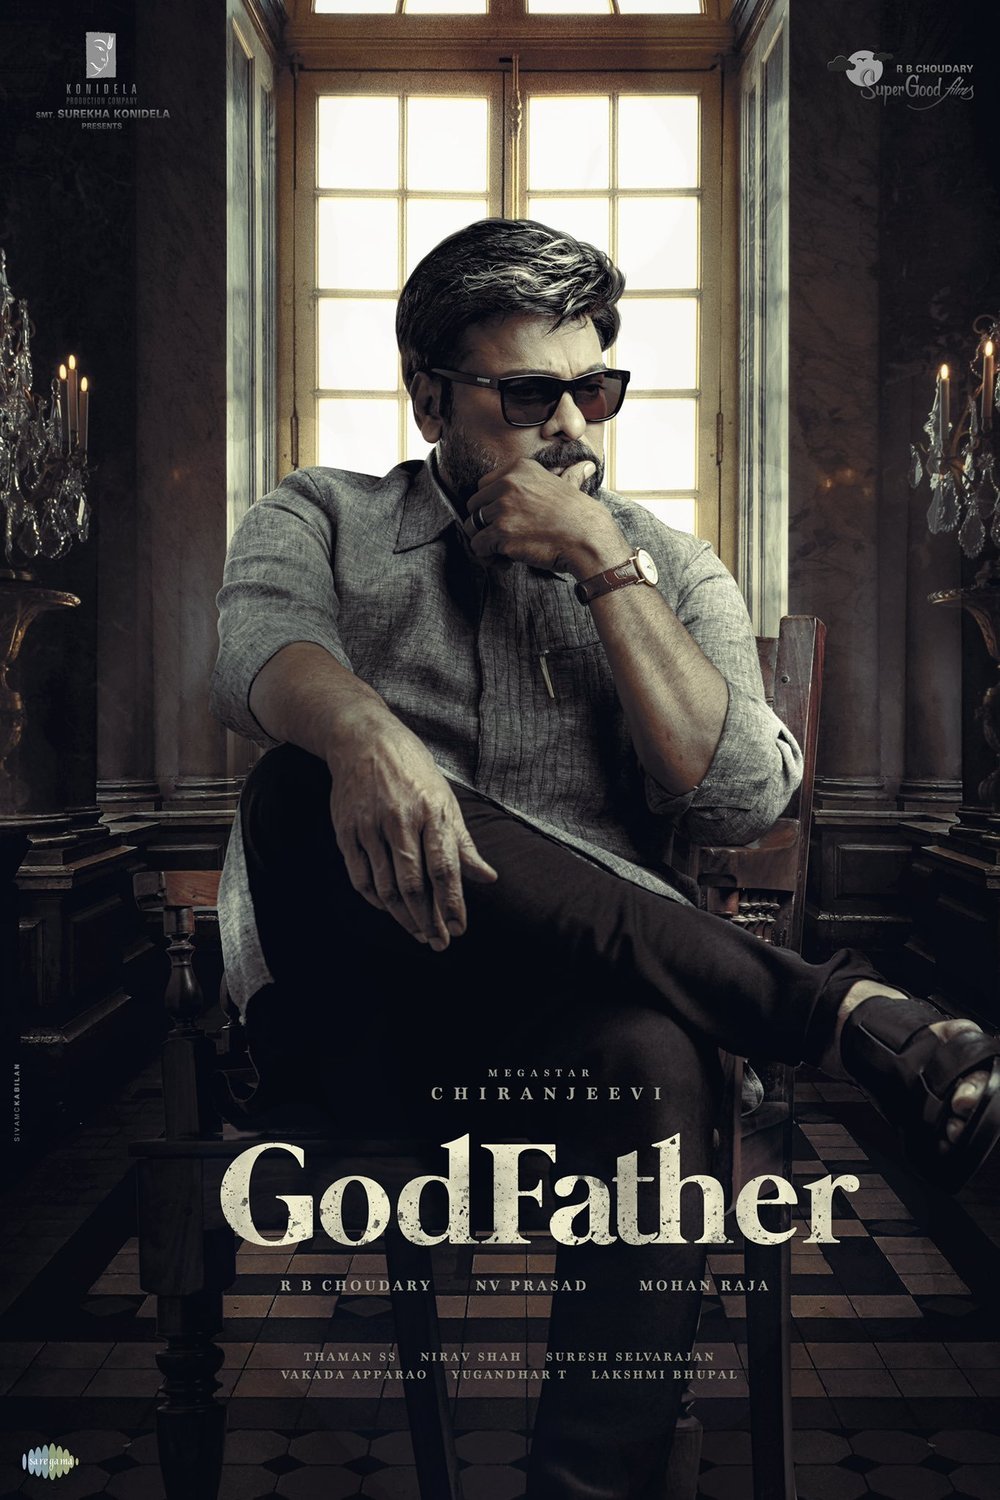 Telugu poster of the movie GodFather